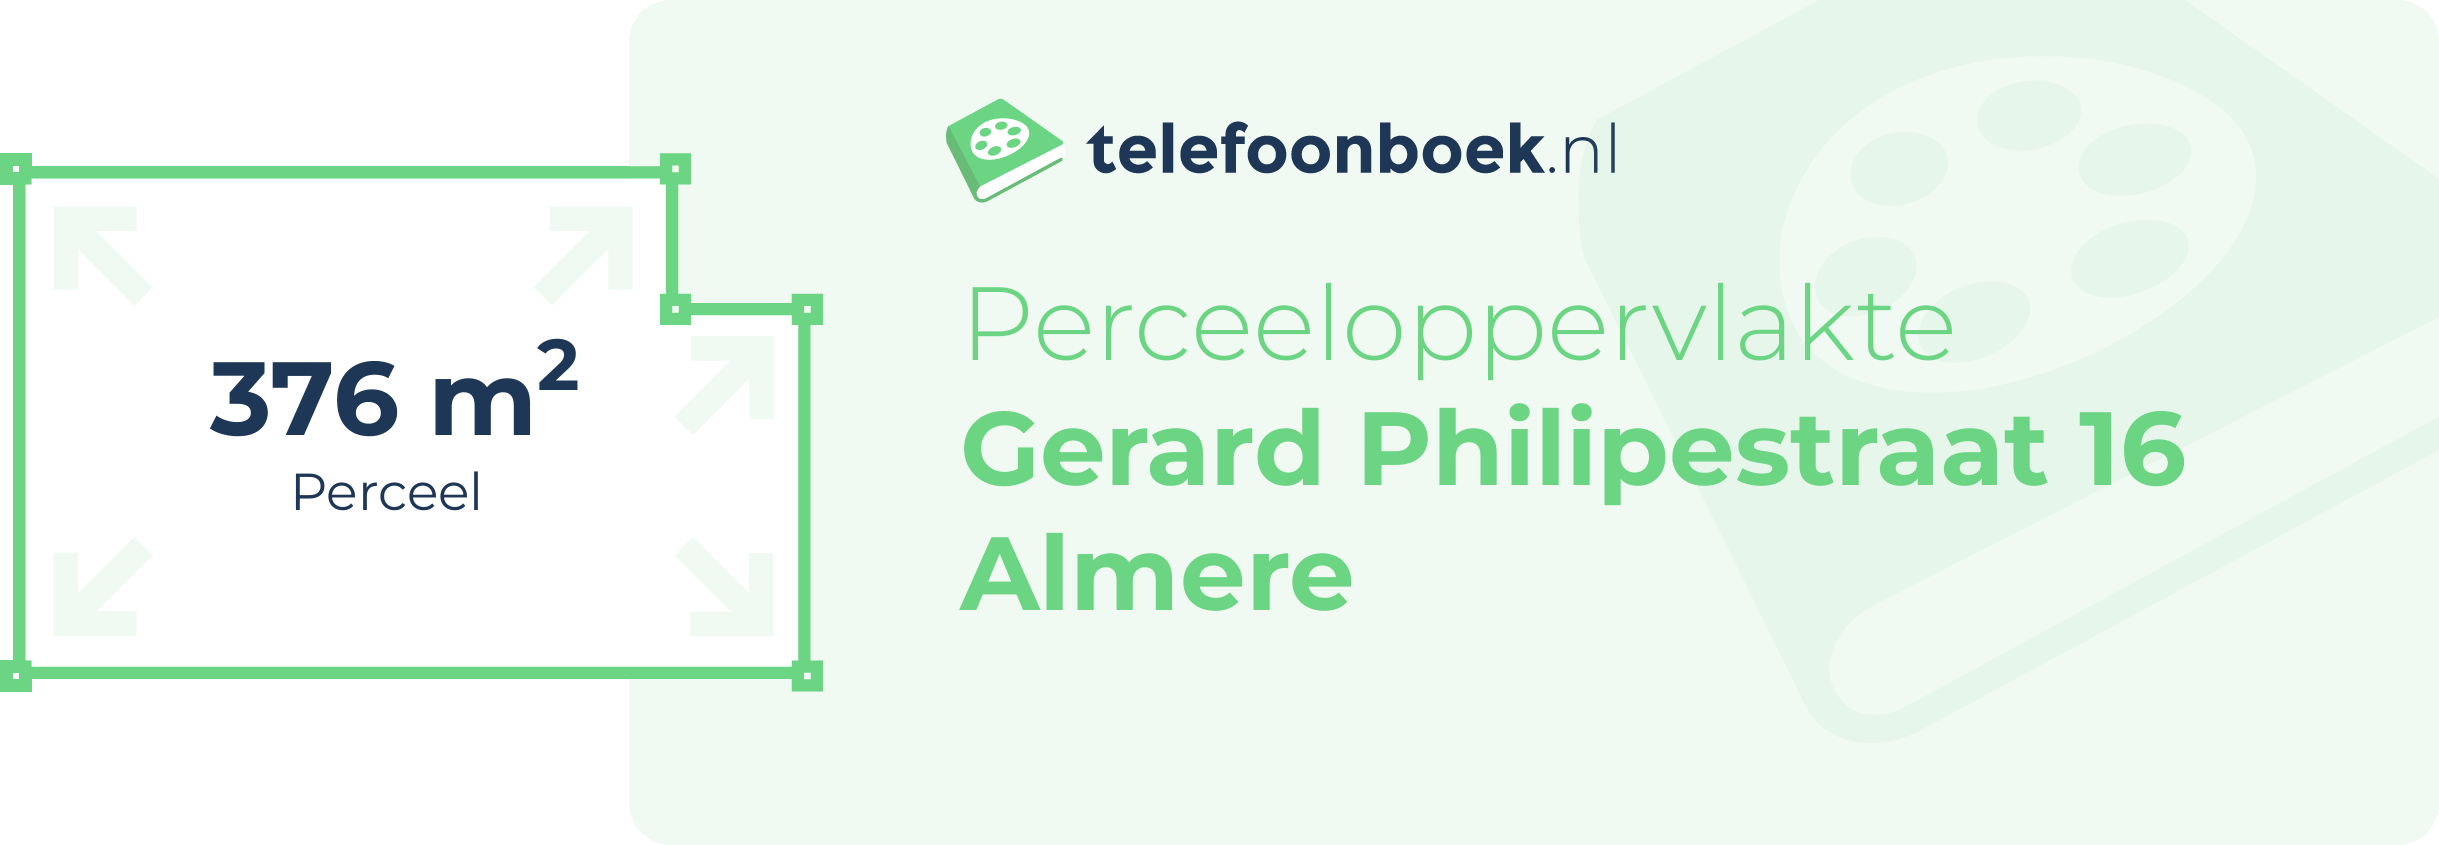 Perceeloppervlakte Gerard Philipestraat 16 Almere